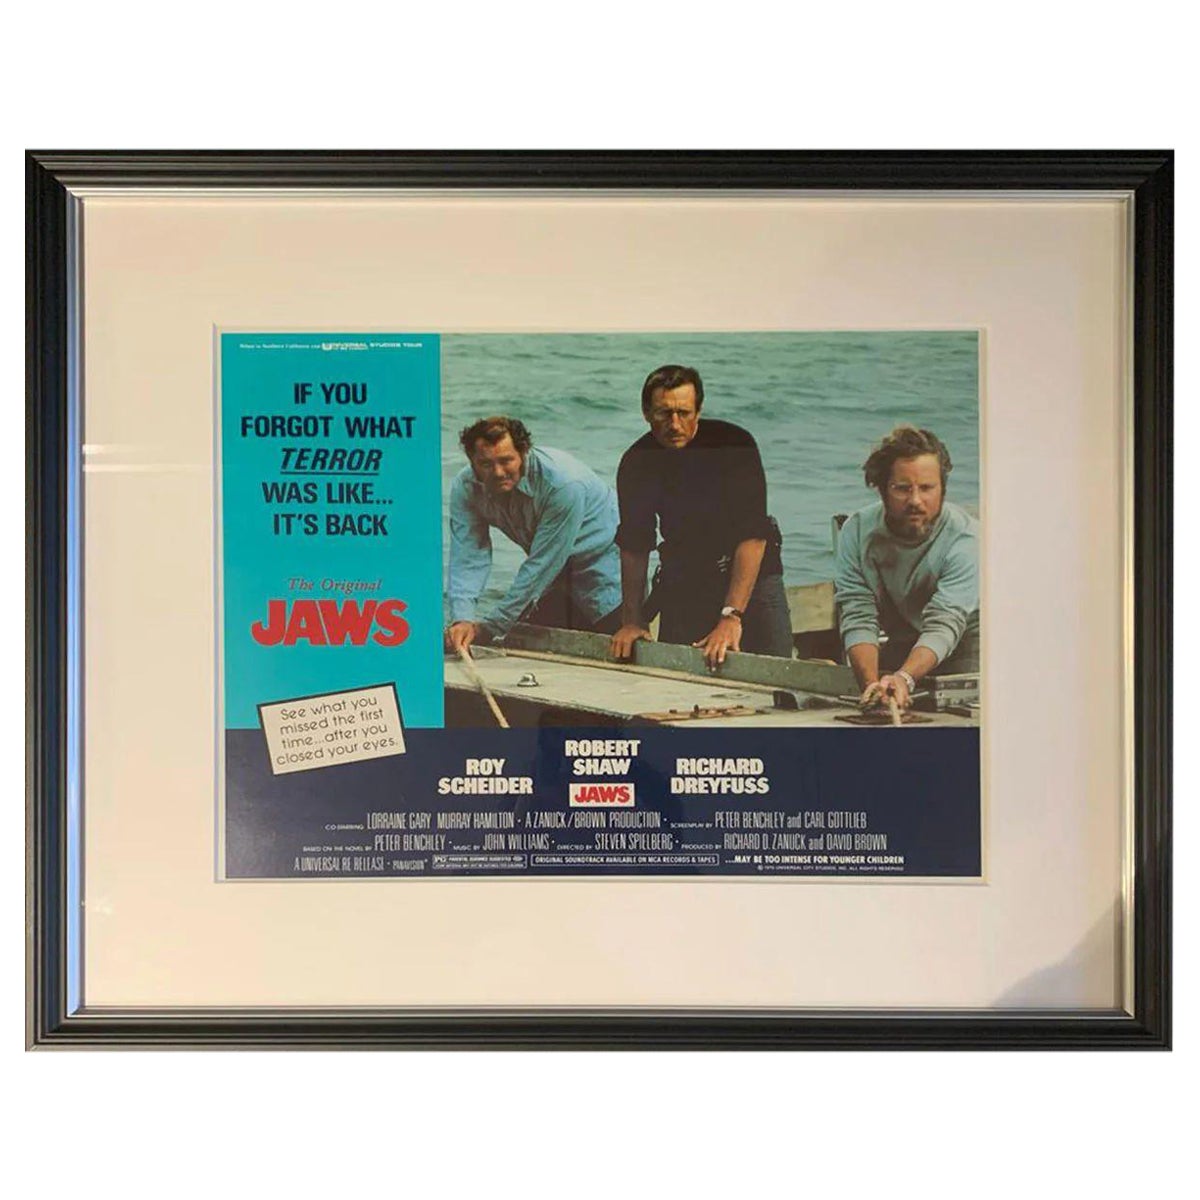 Jaws, Framed Poster, 1979R For Sale